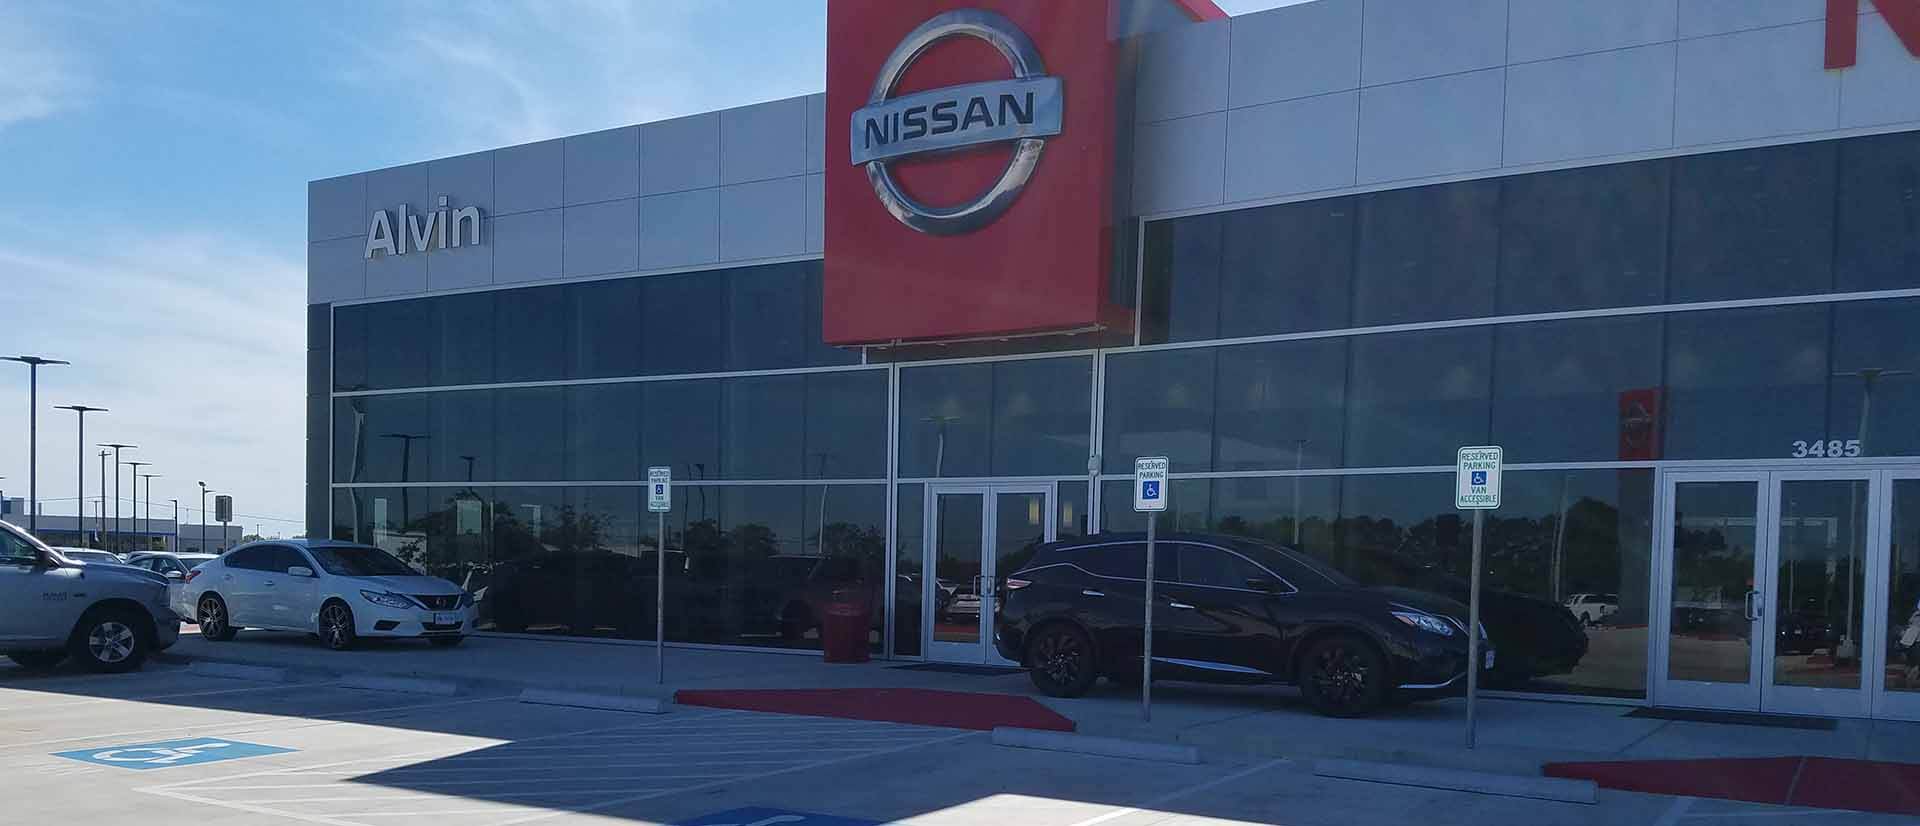 Reliance Nissan